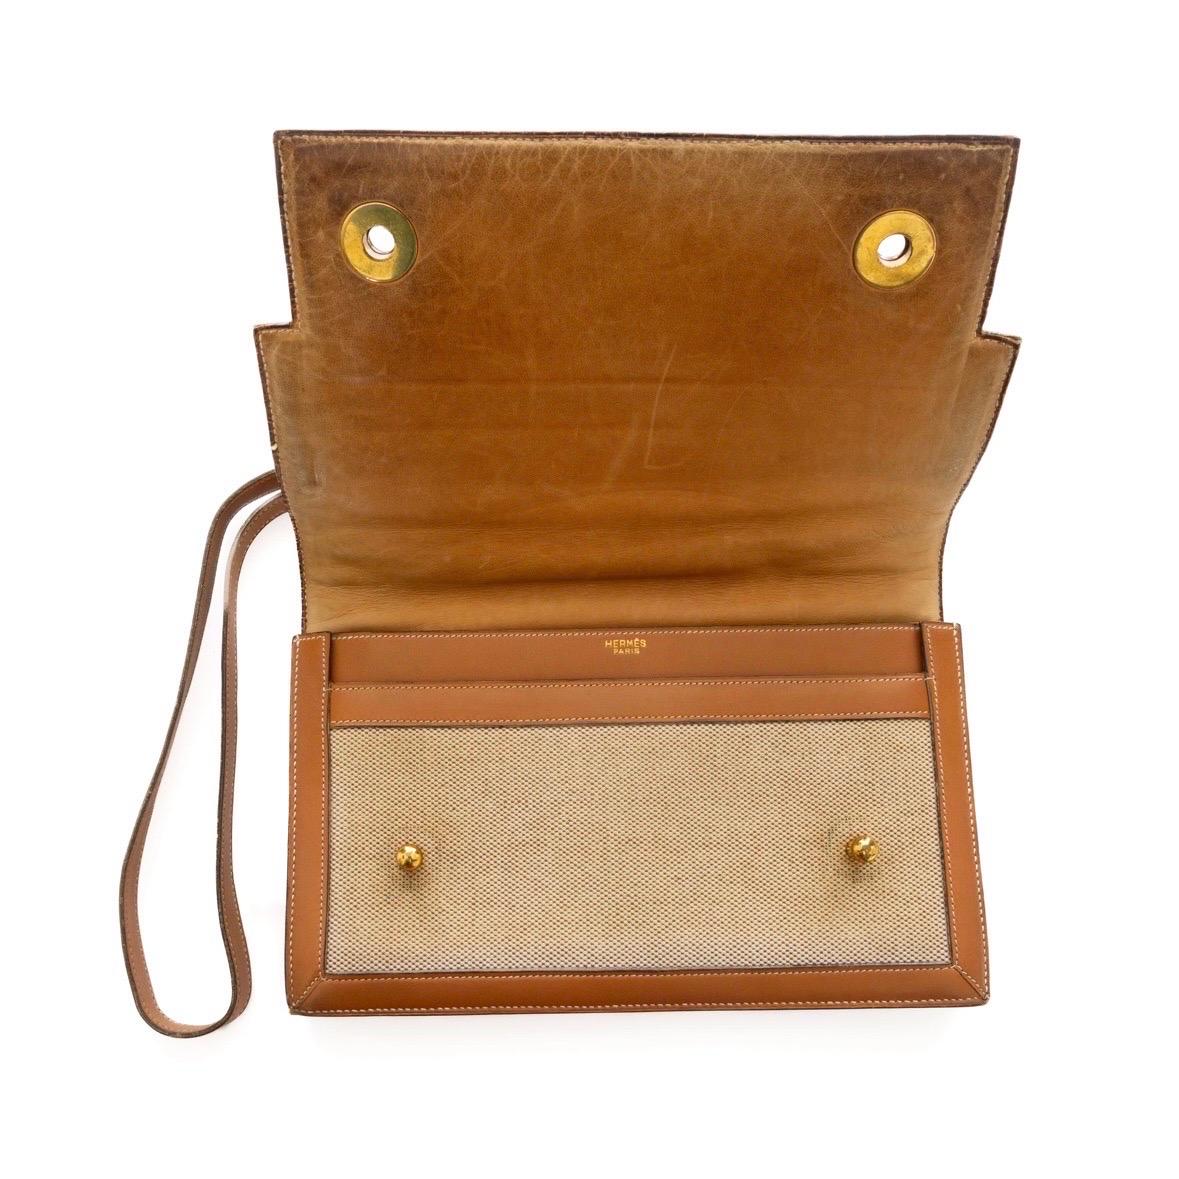 Hermès Vintage Tan Leather and Canvas Piano Shoulder Bag (Circa 1960s) For Sale 9